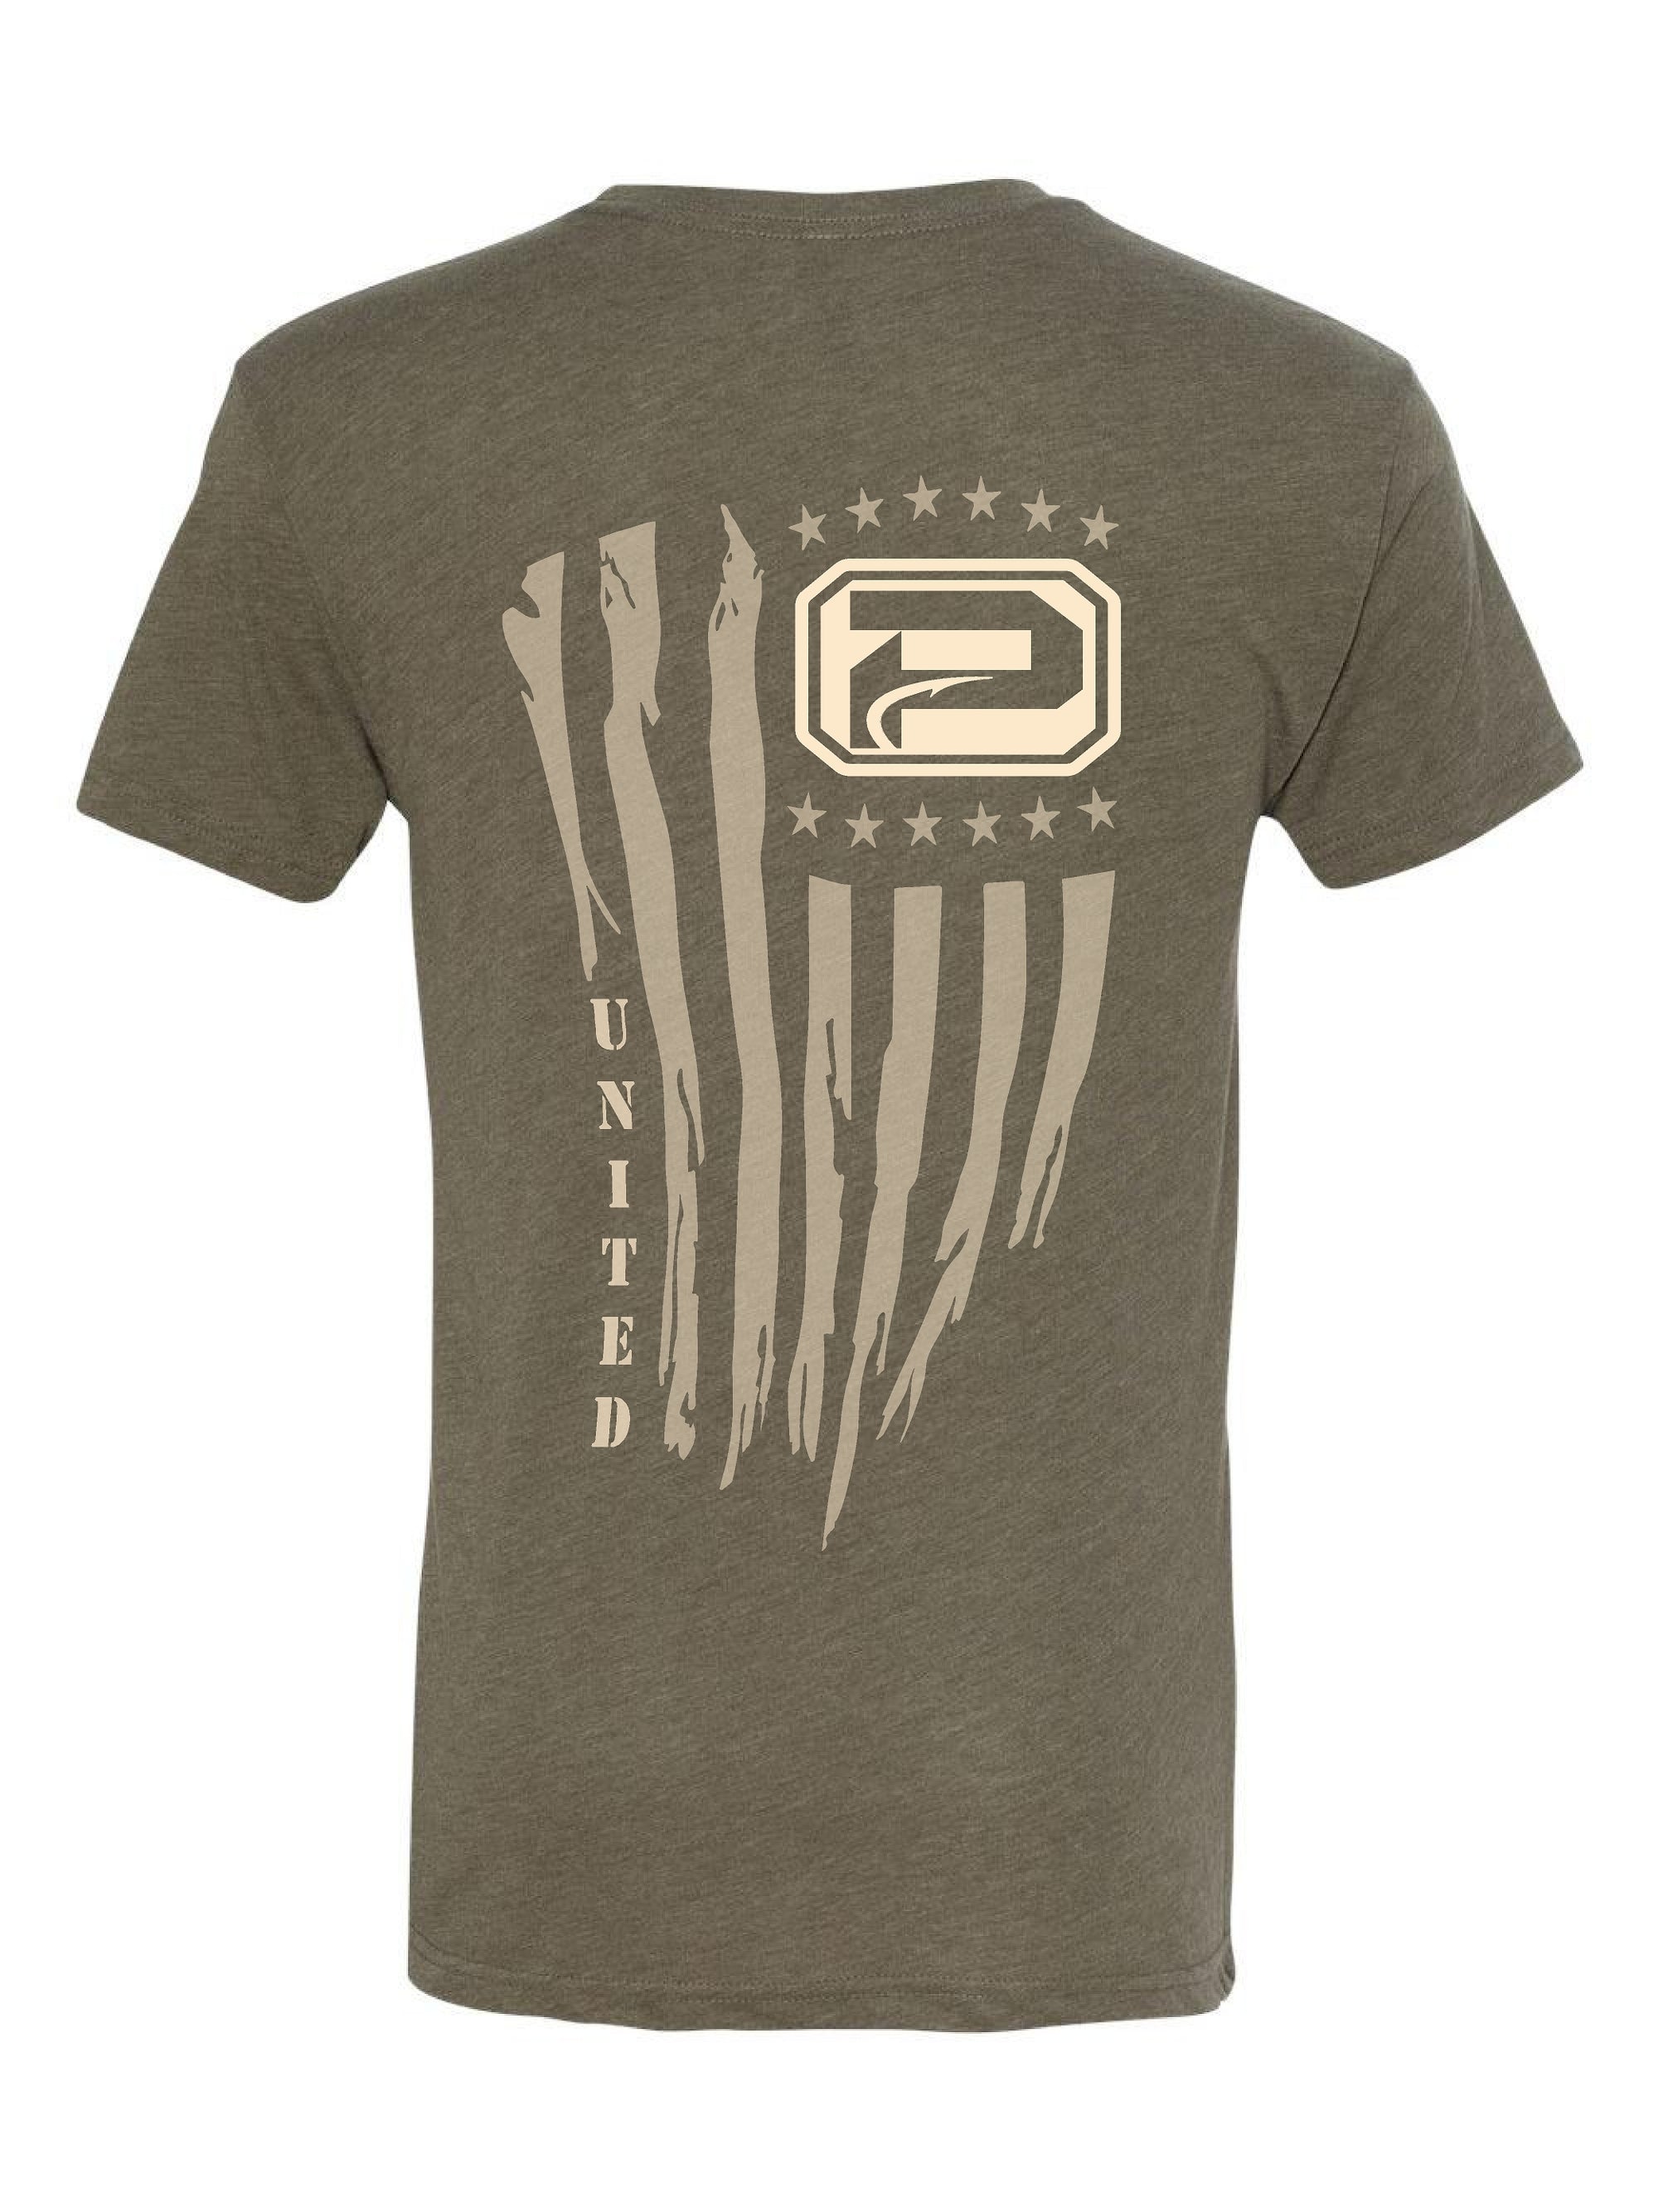 Phantom Outdoors "United" Triblend T-Shirt